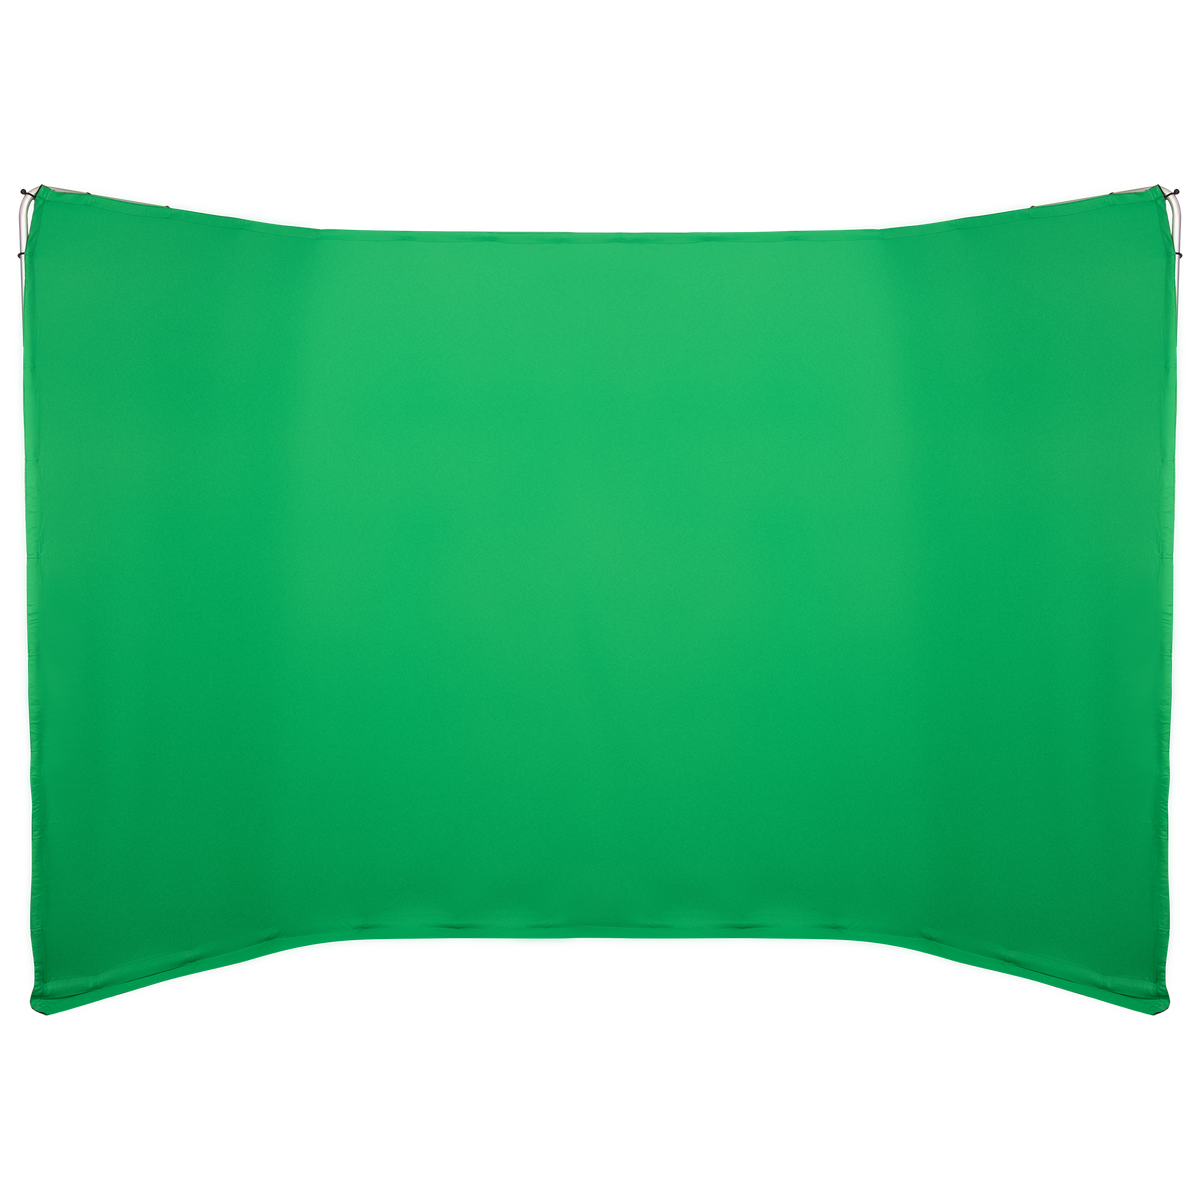 Panorama green screen set